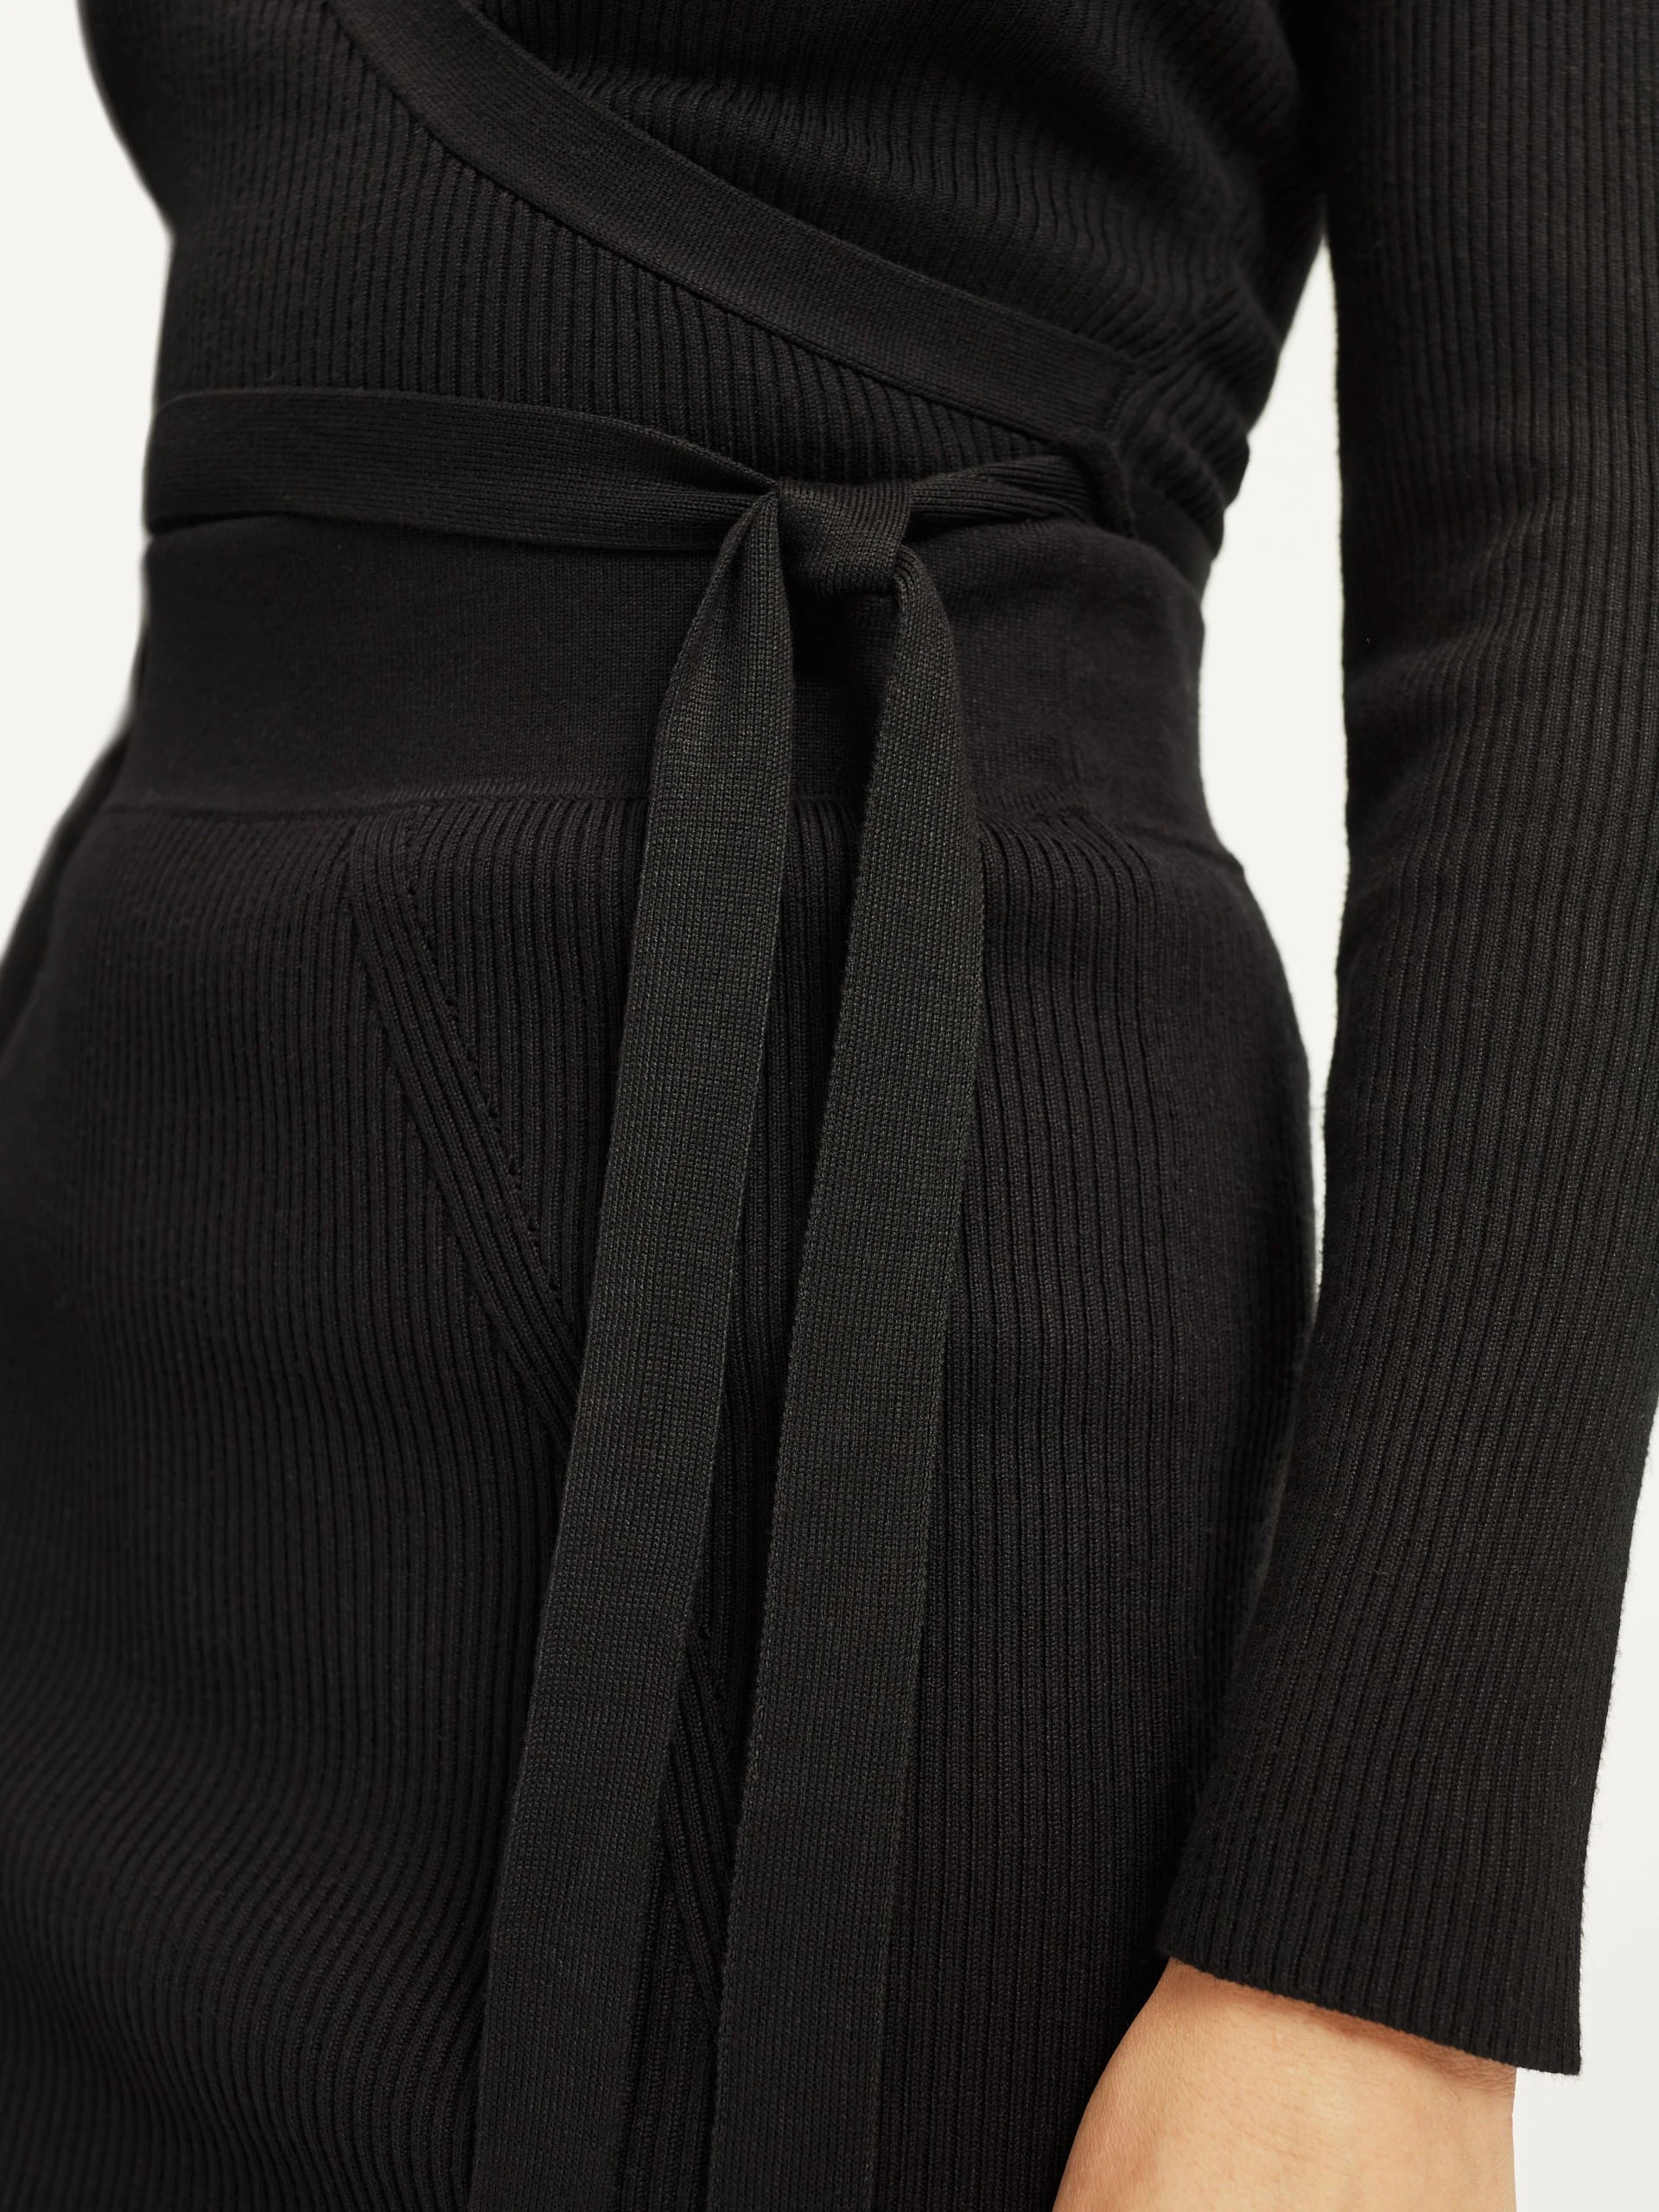 Black soft knit skirt